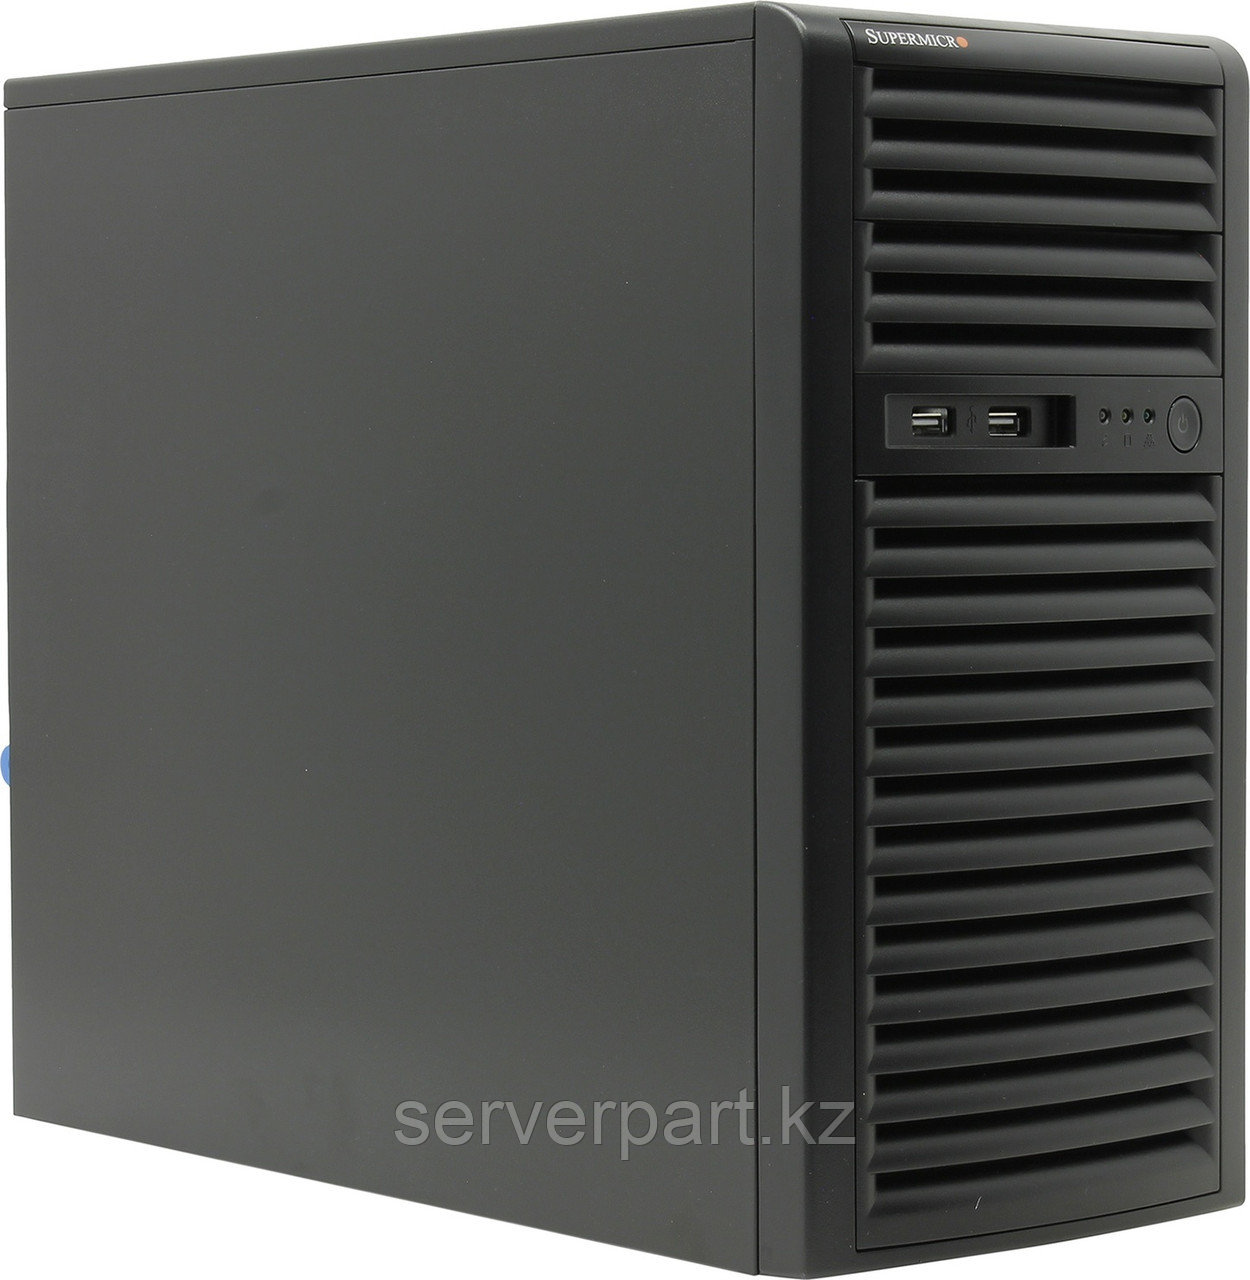 Сервер Supermicro SYS-5039D Tower/4-core intel xeon E3-1220v6 3GHz/32GB UDIMM nECC/1x240GB SSD MU Hyb, фото 1